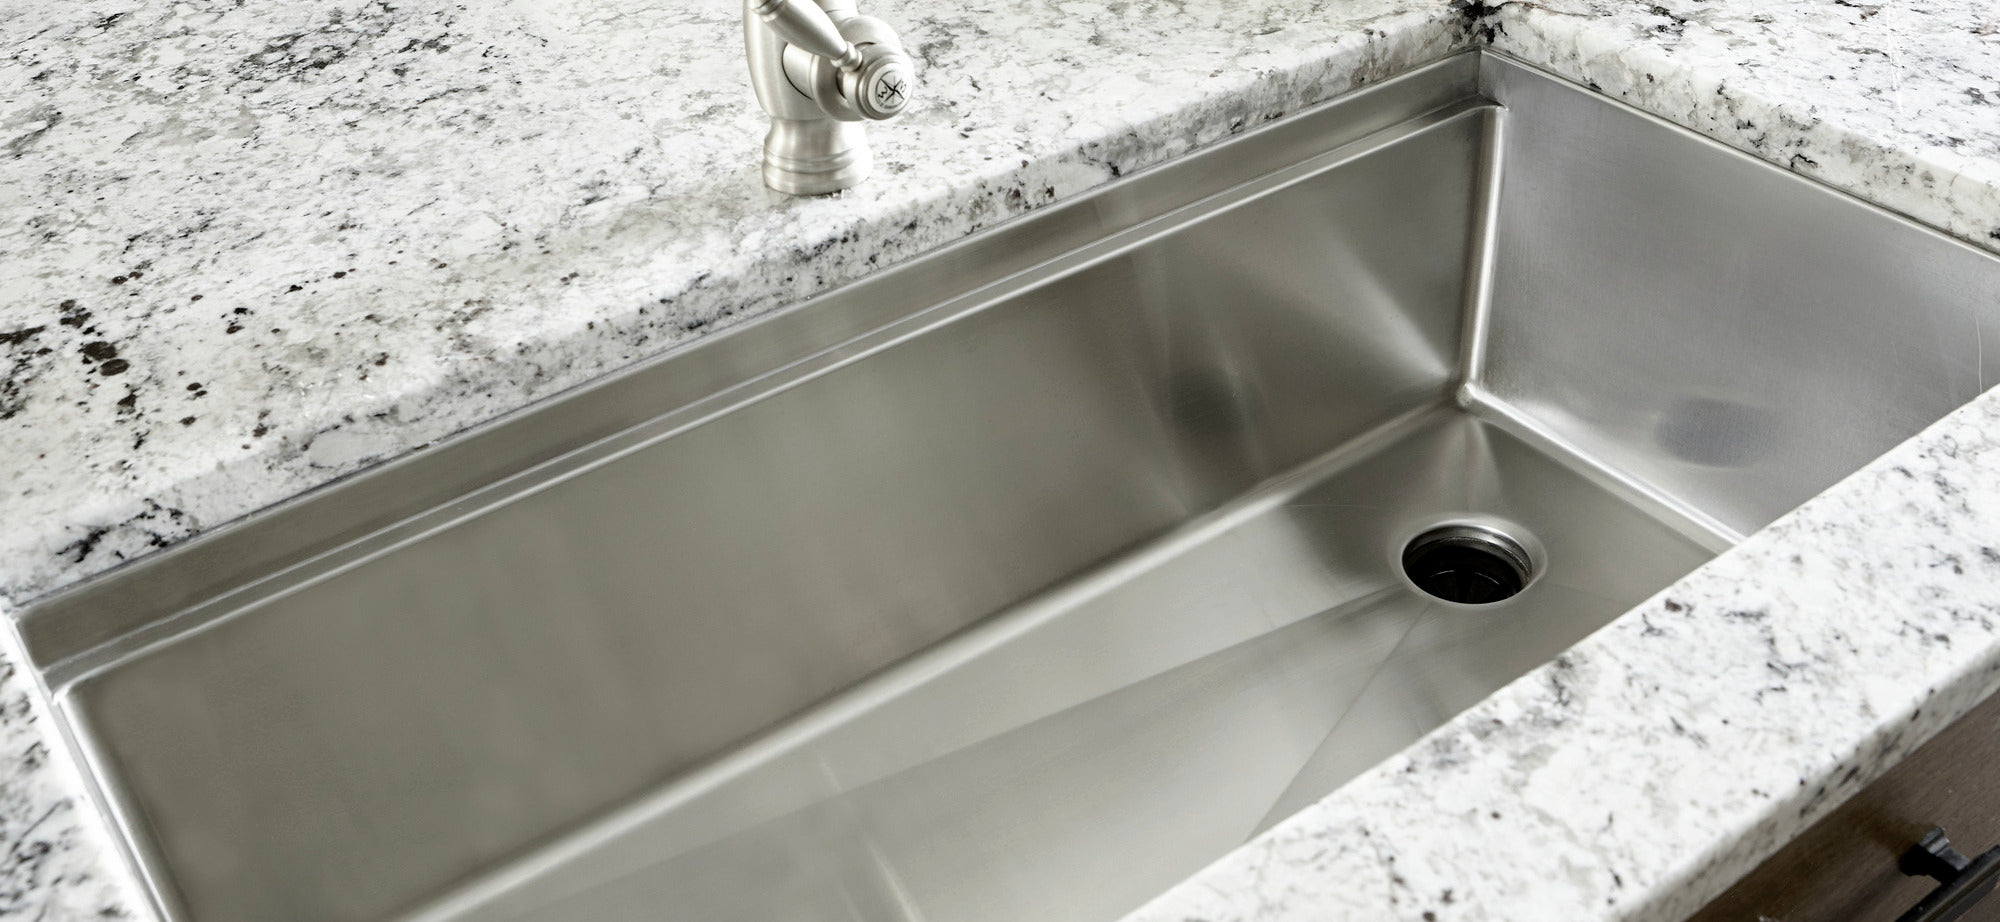 Offset Drain – Create Good Sinks